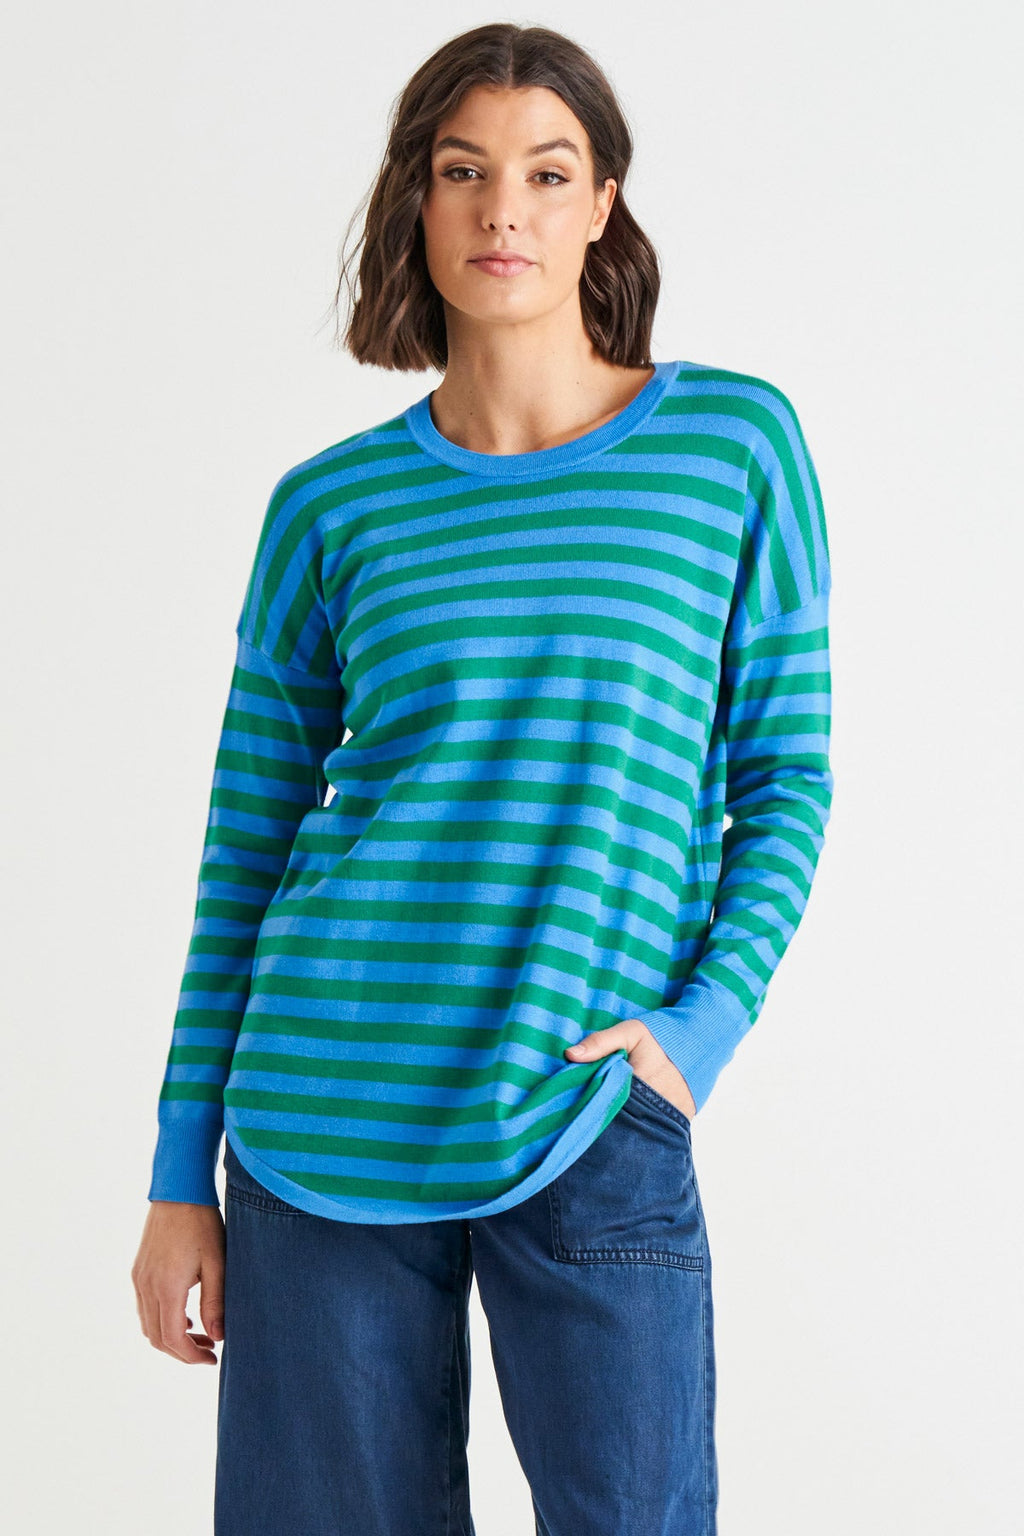 Betty Basics Sophie Knit Jumper - Green/Blue Stripe [CLR:GREEN/BLUE STRIPE SZ:8]